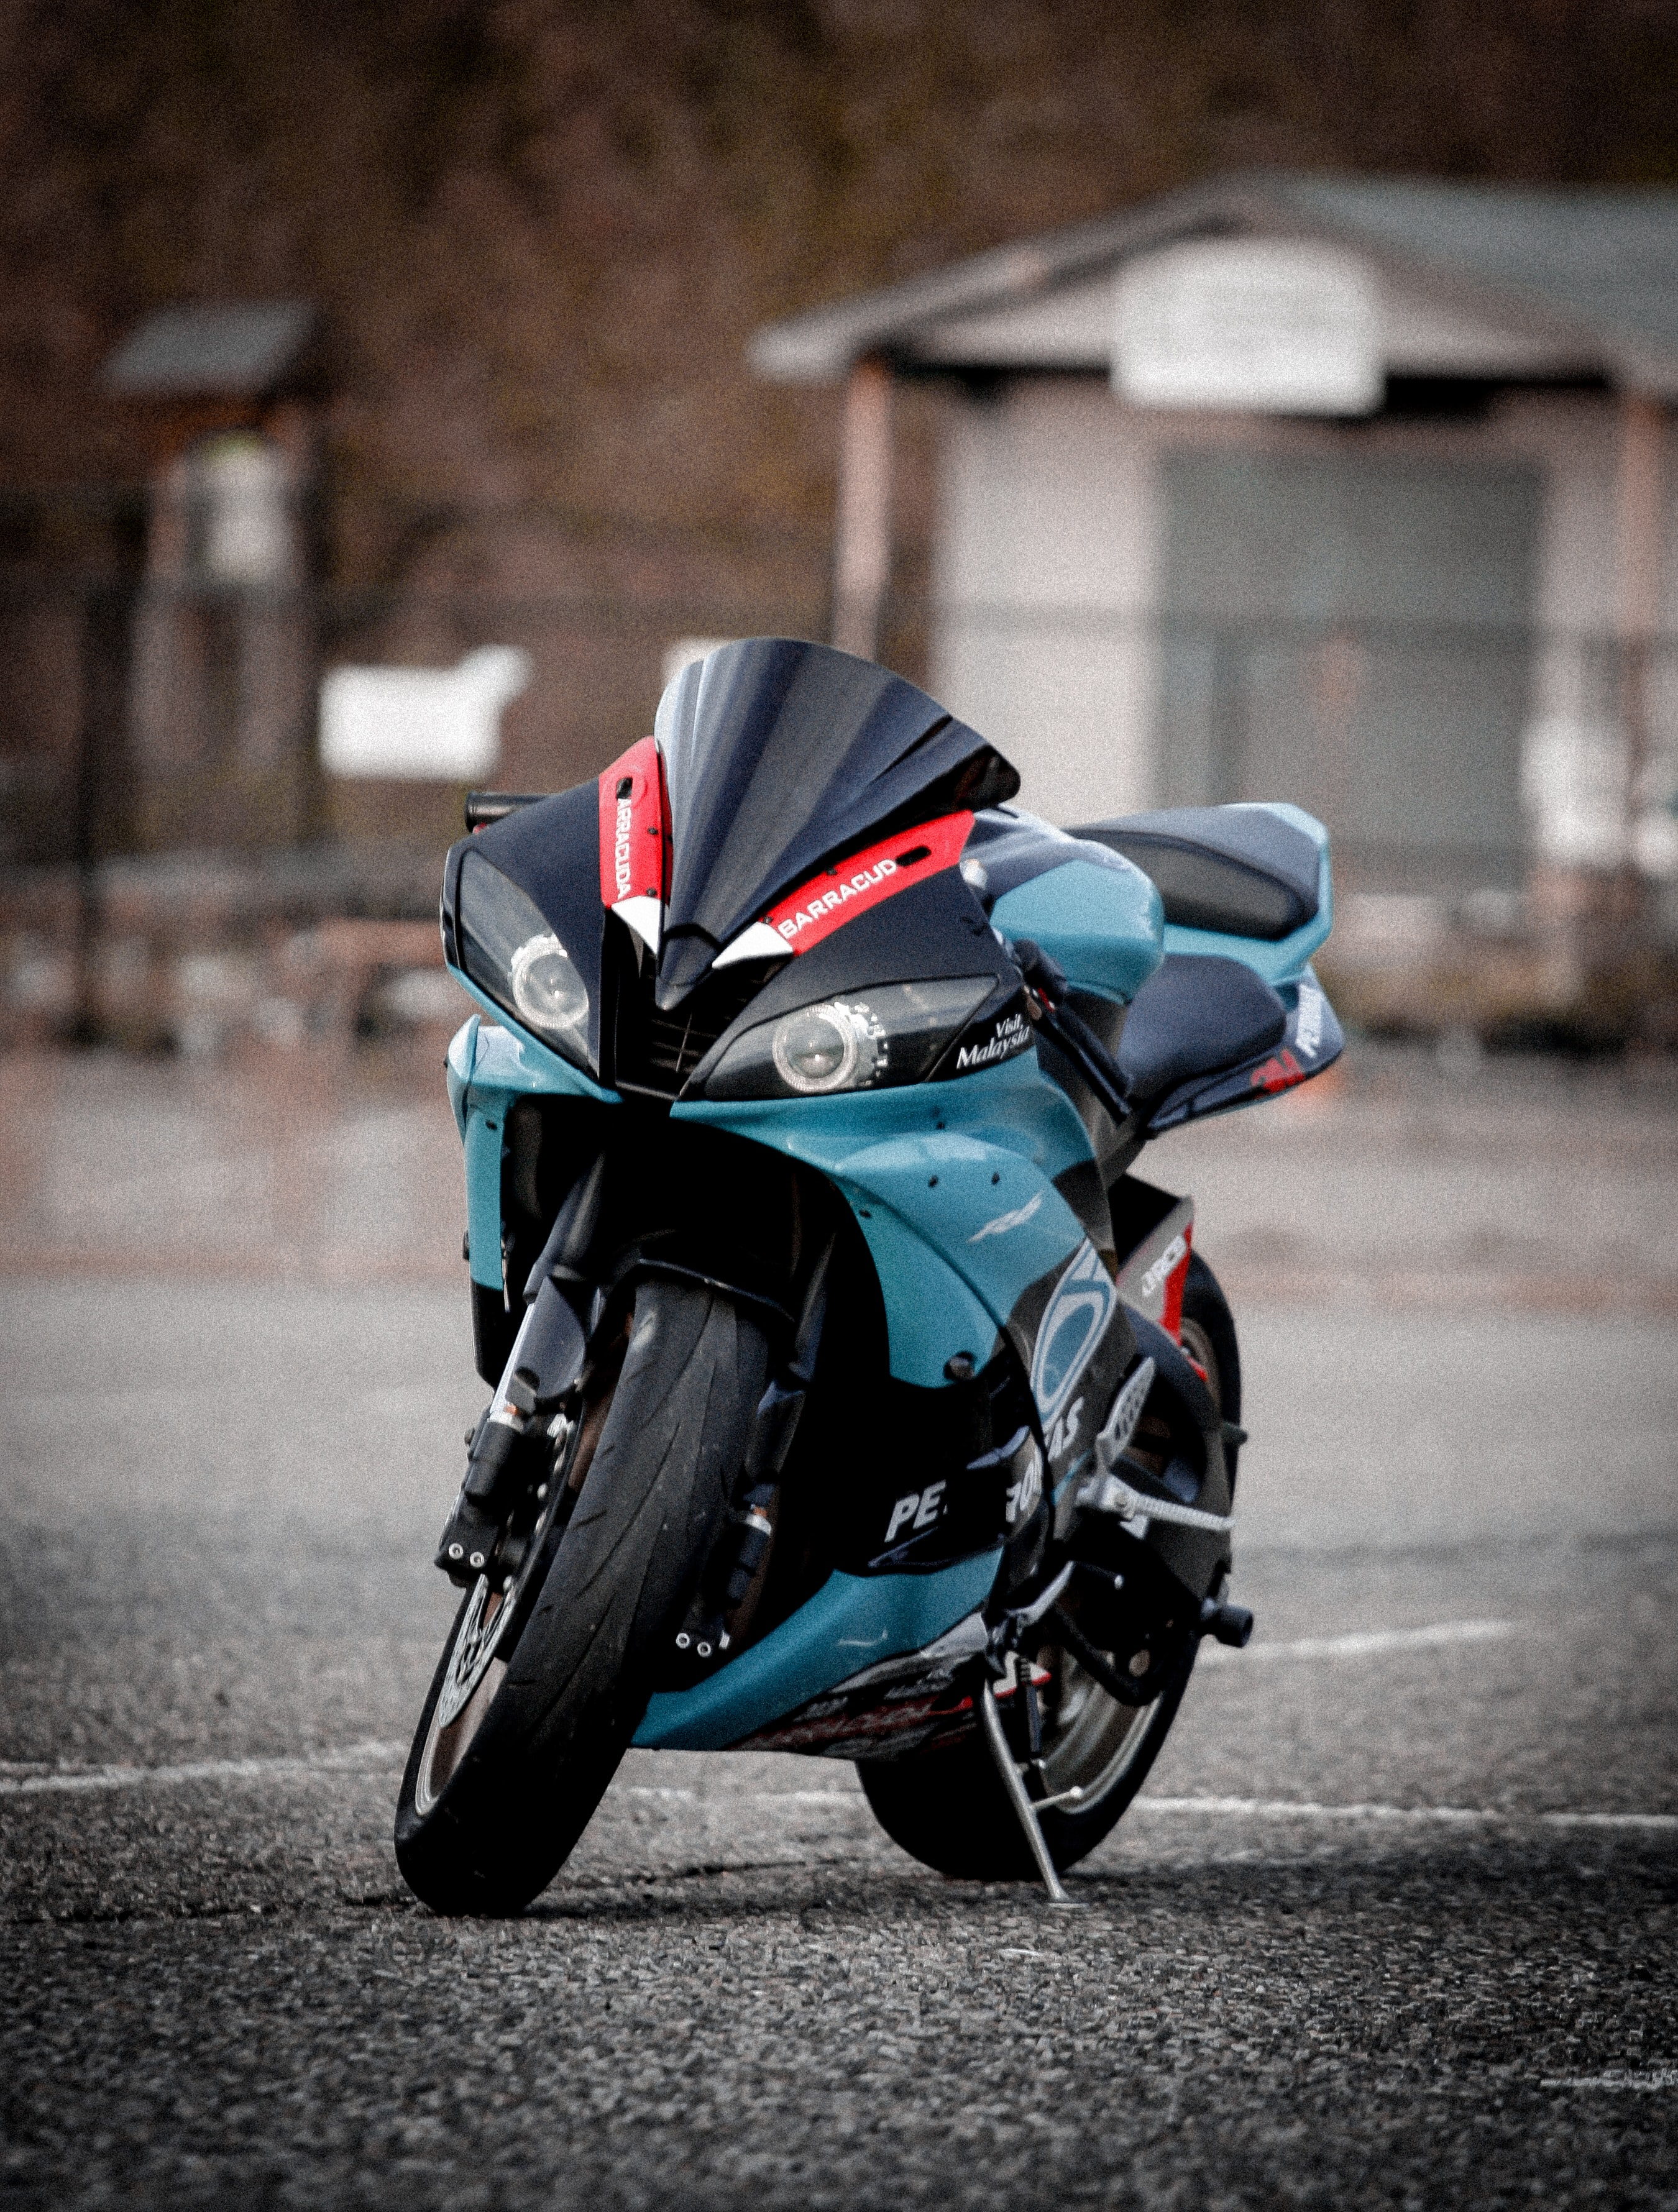 bike, motorcycles, sportbike, sport bike, motorcycle, blue, front view